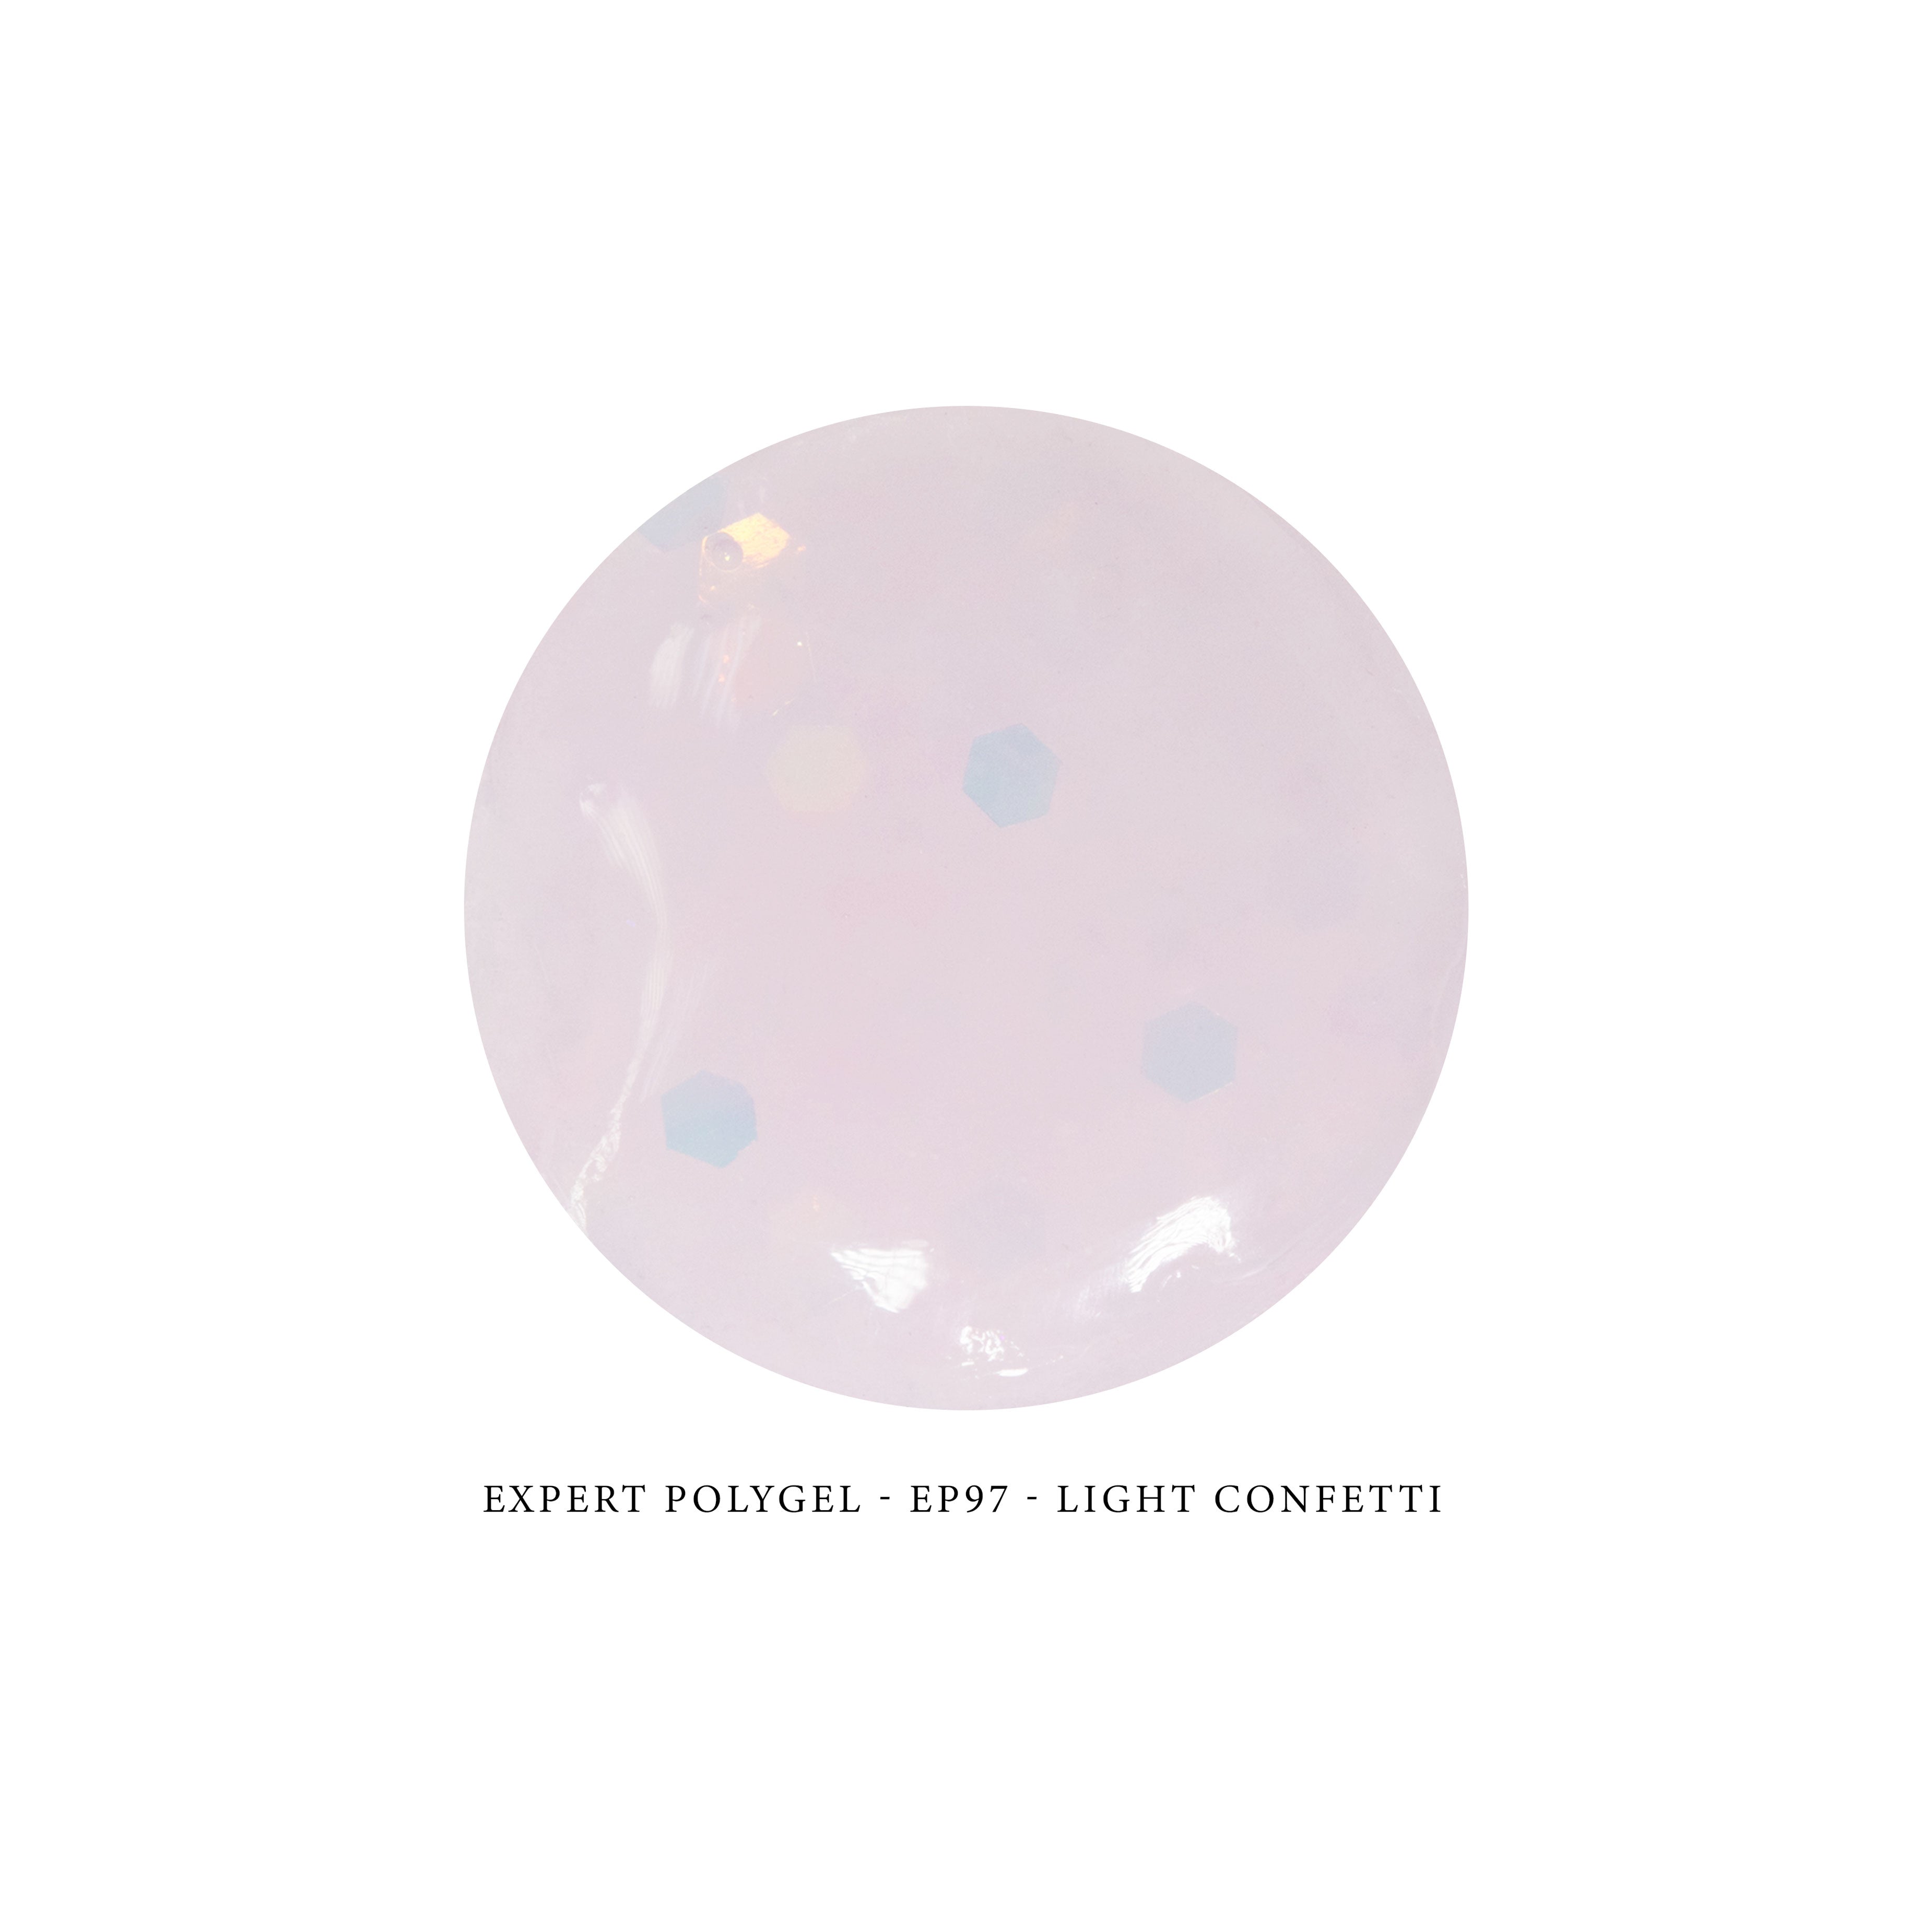 Expert Polygel EP97 - LIGHT CONFETTI 60/30g